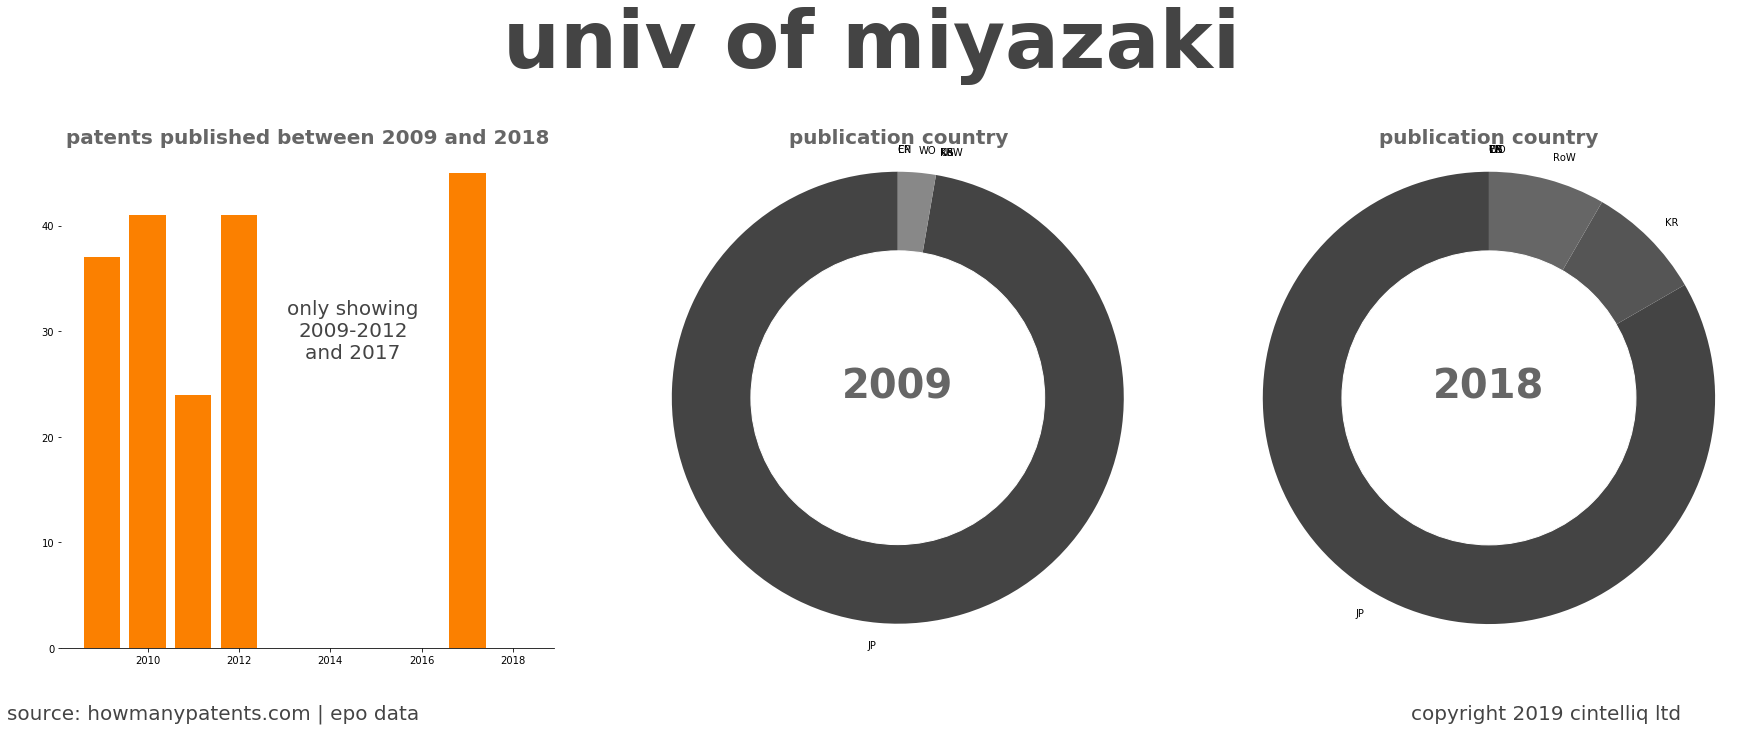 summary of patents for Univ Of Miyazaki